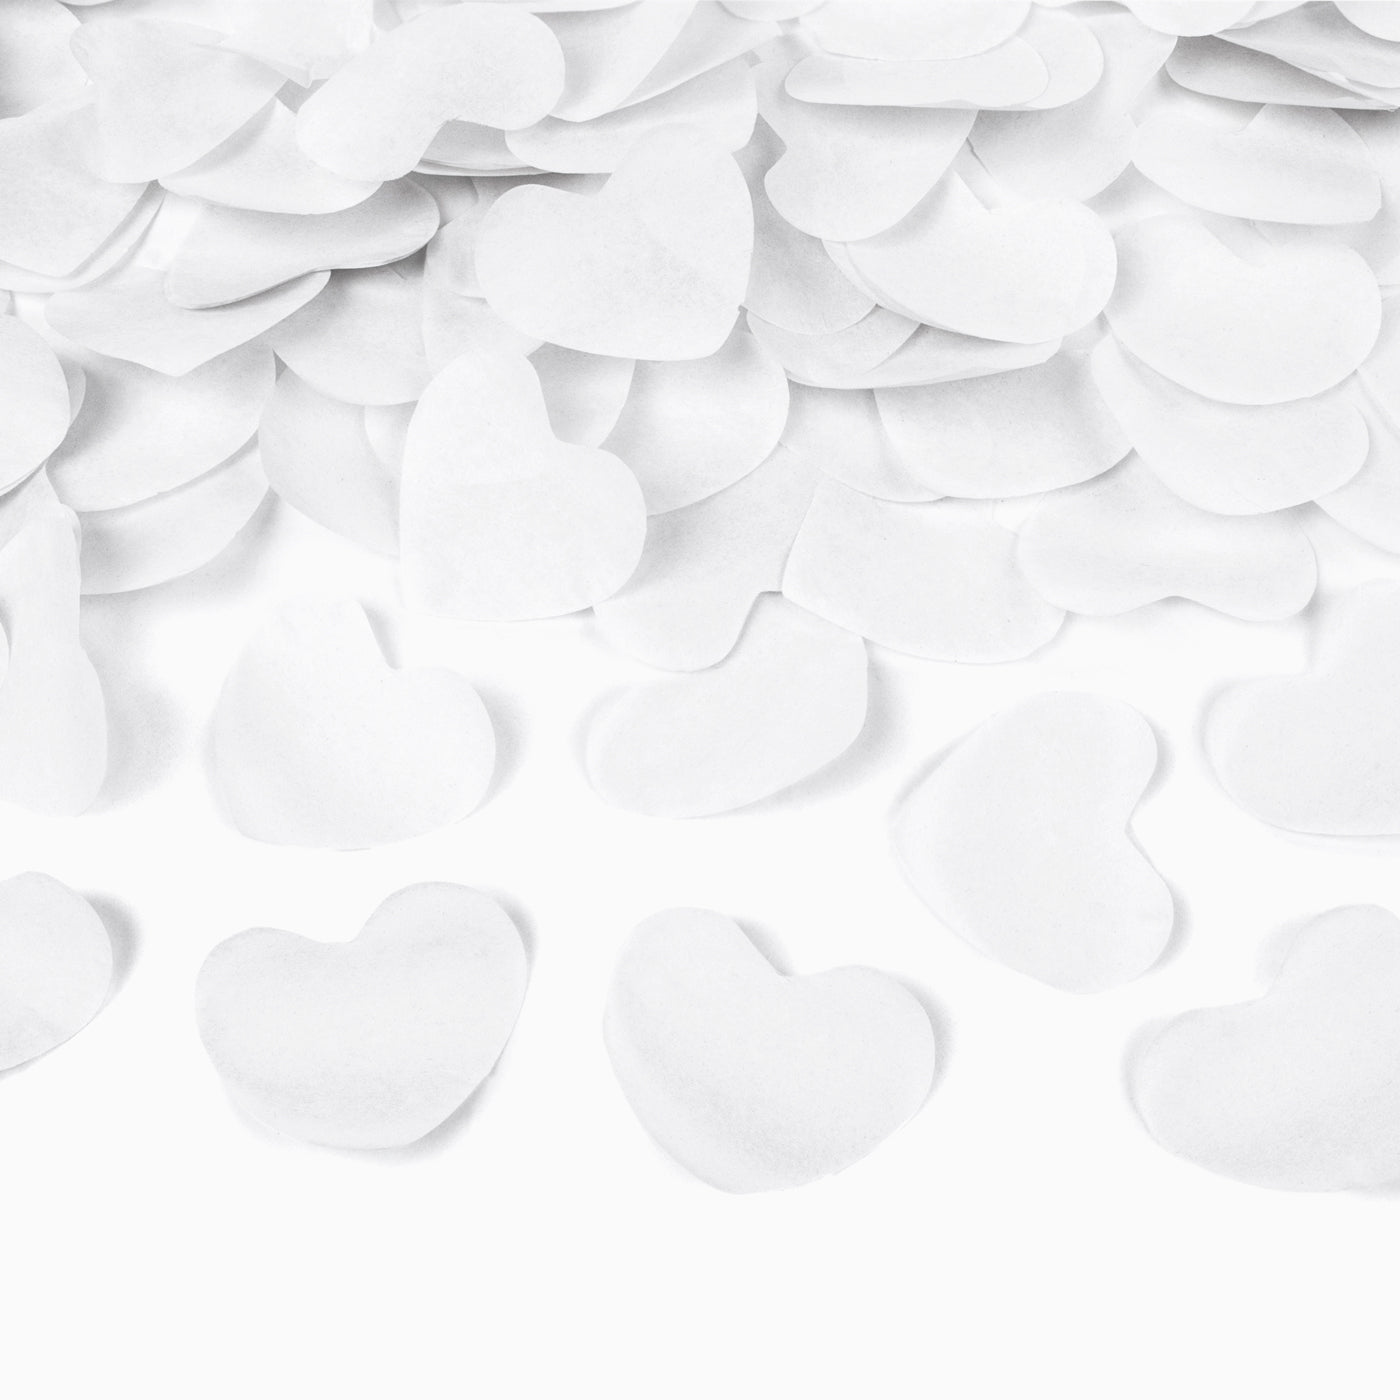 Confeti White Hearts 60 cm biologisch abbaubares Papier